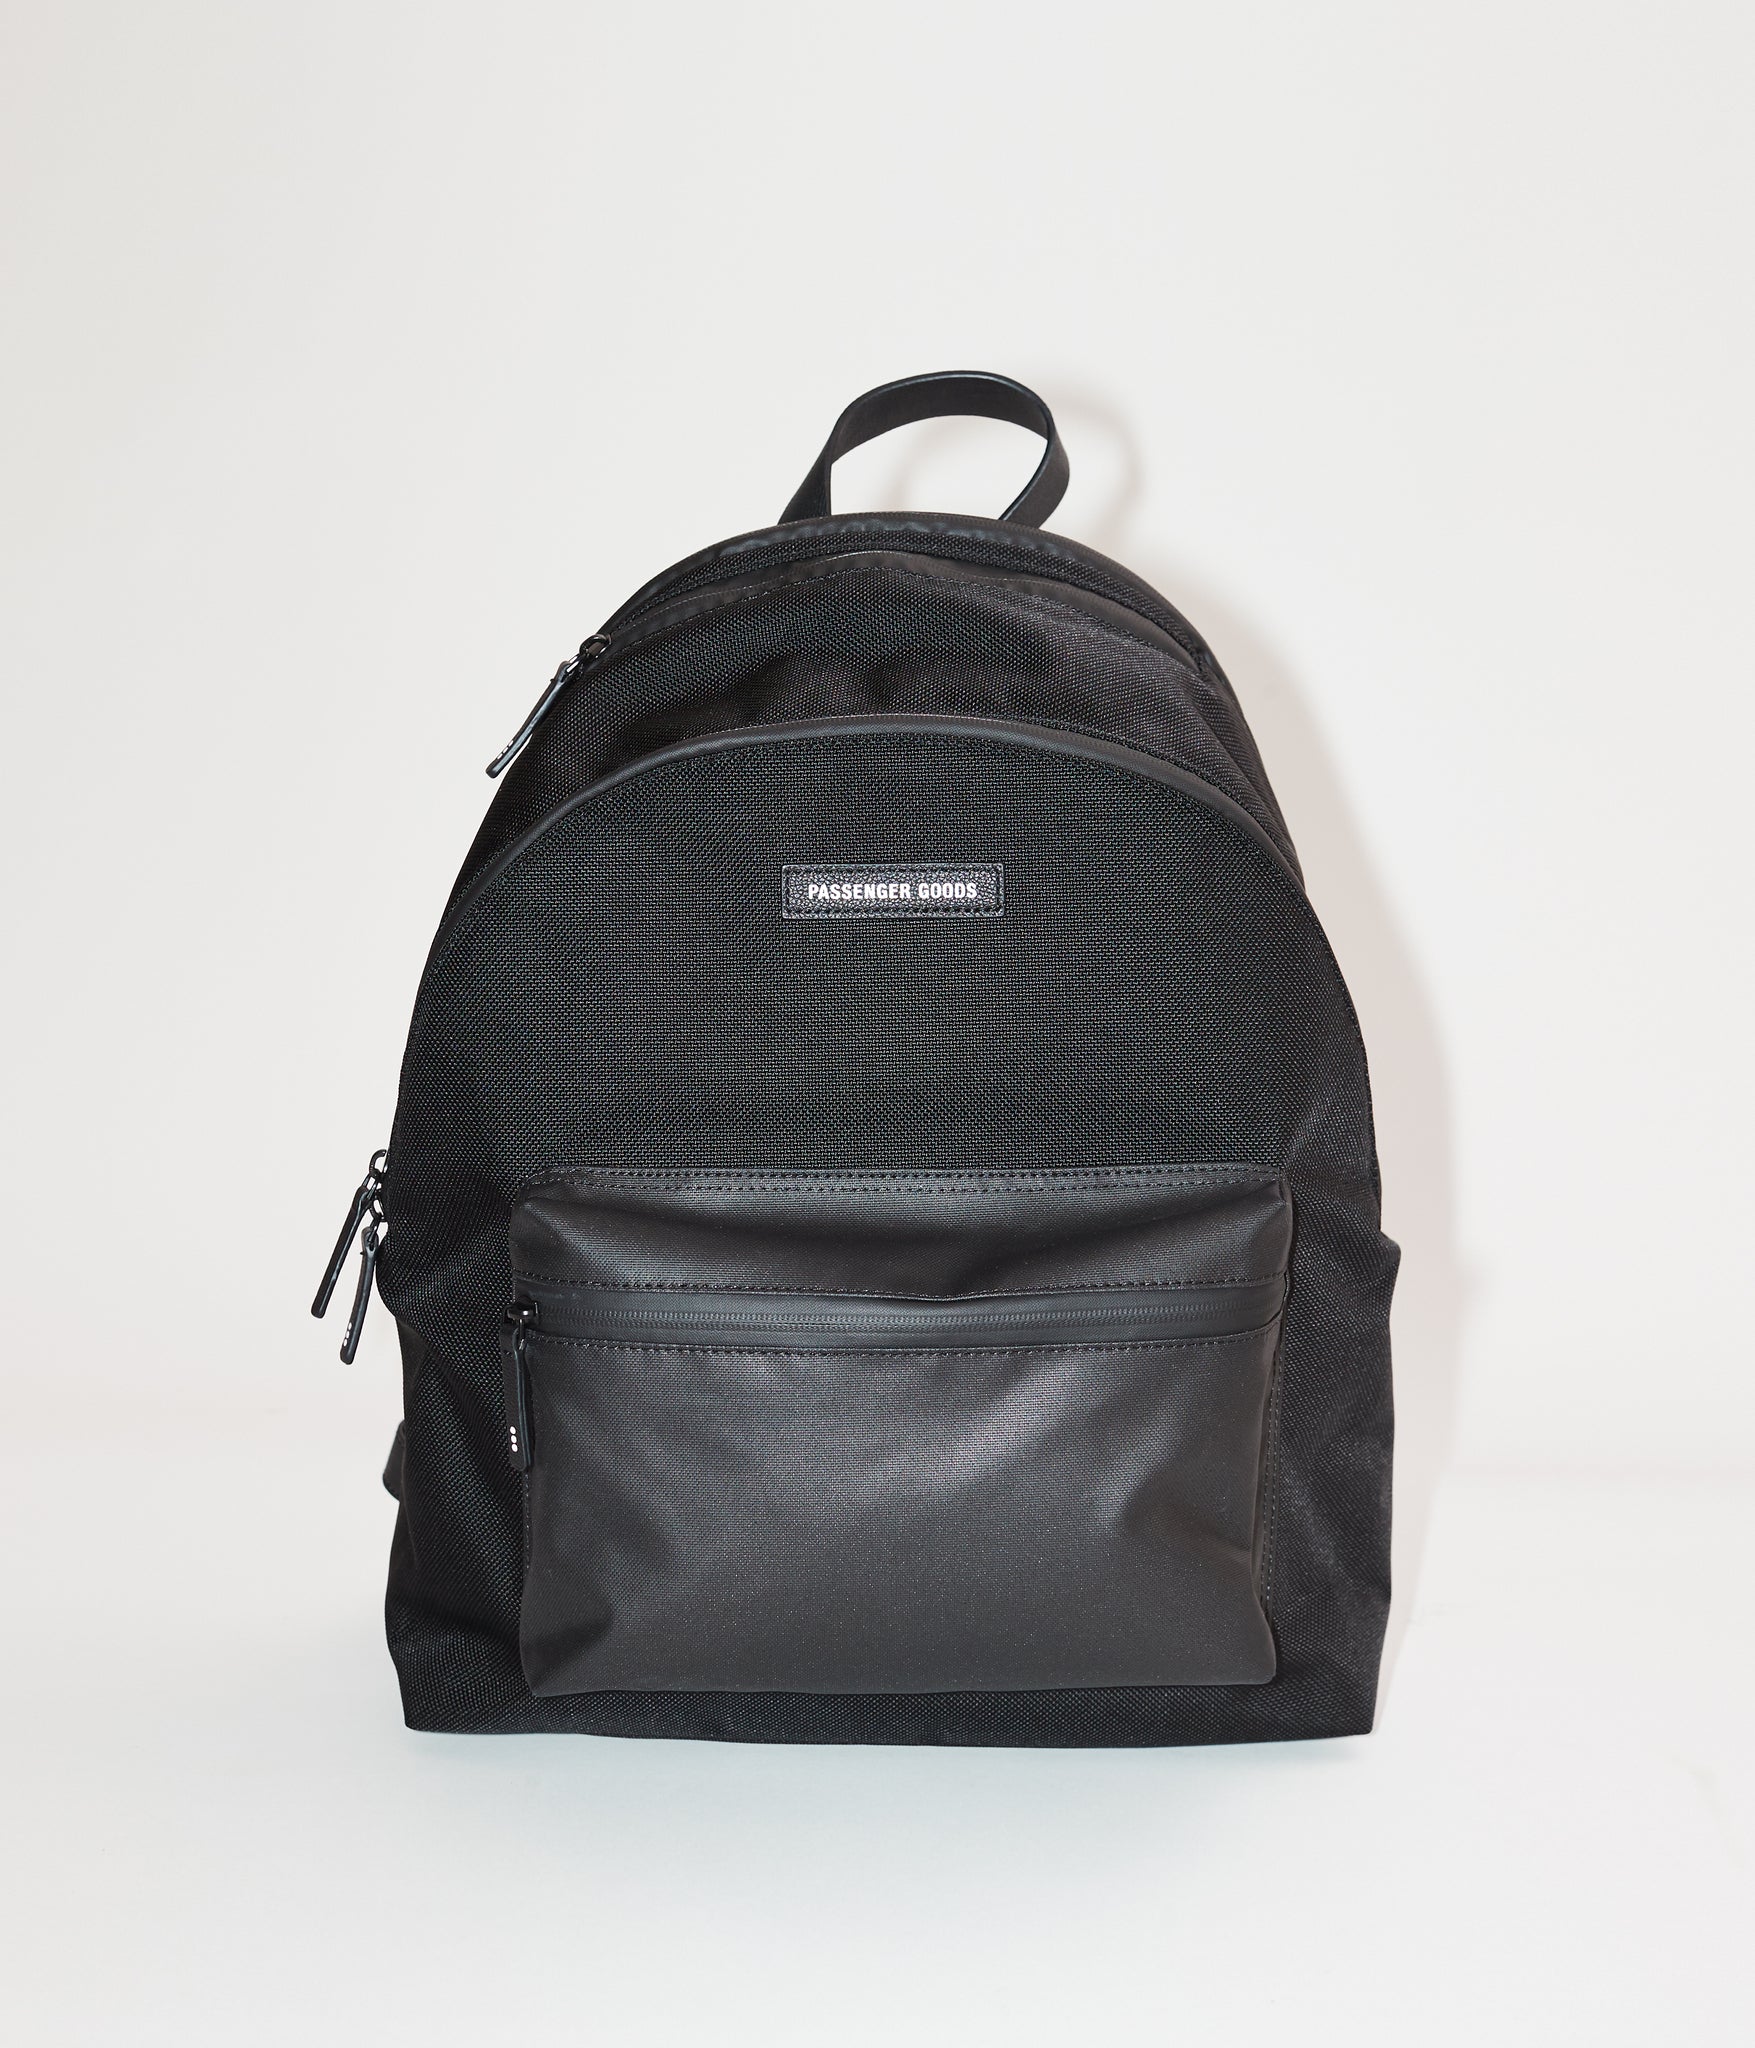 Express Backpack in Black